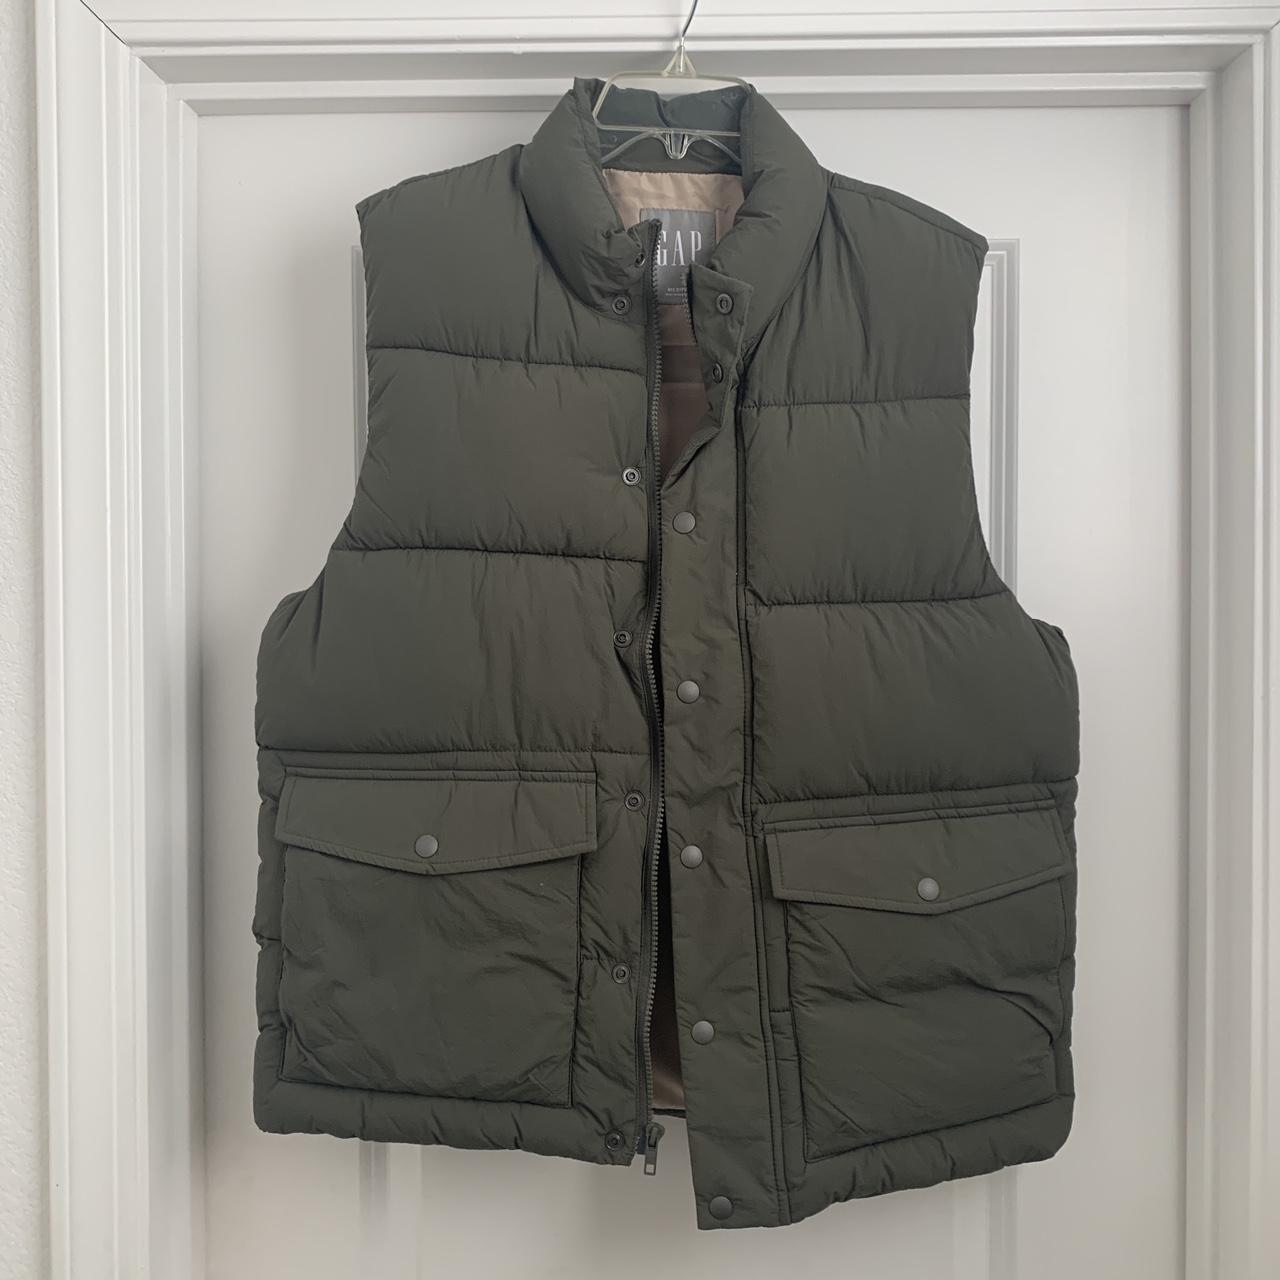 GAP green puffer vest size medium dm for measurements - Depop